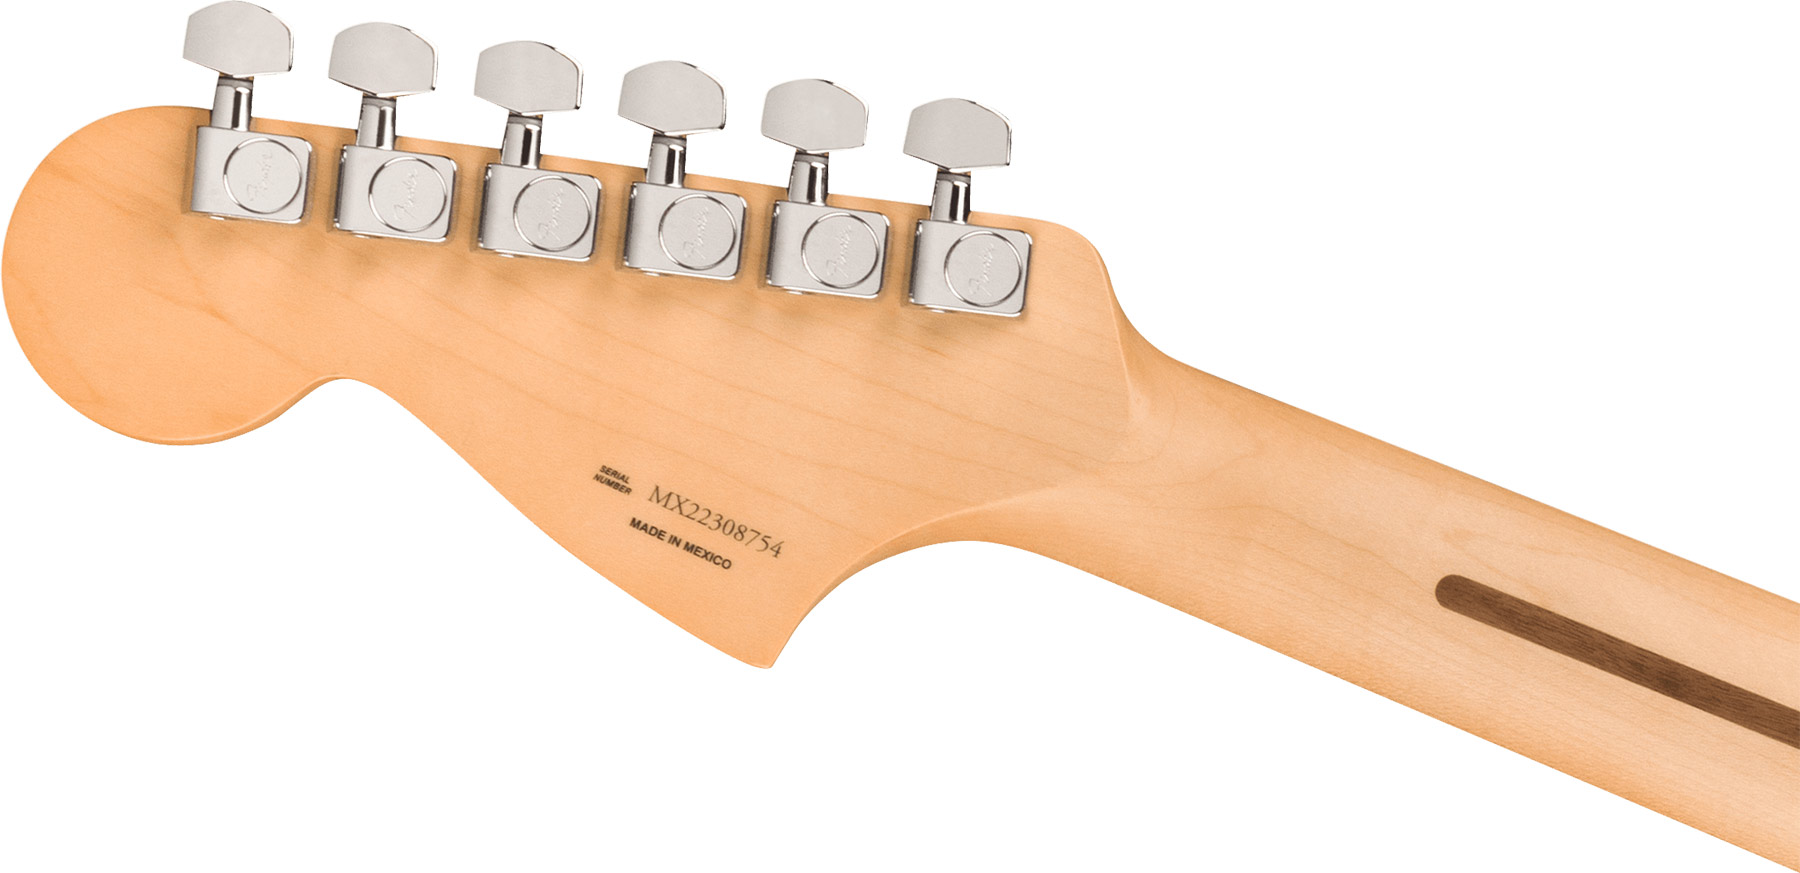 Fender Jaguar Player Mex 2023 Hs Trem Pf - Candy Apple Red - Guitarra electrica retro rock - Variation 3